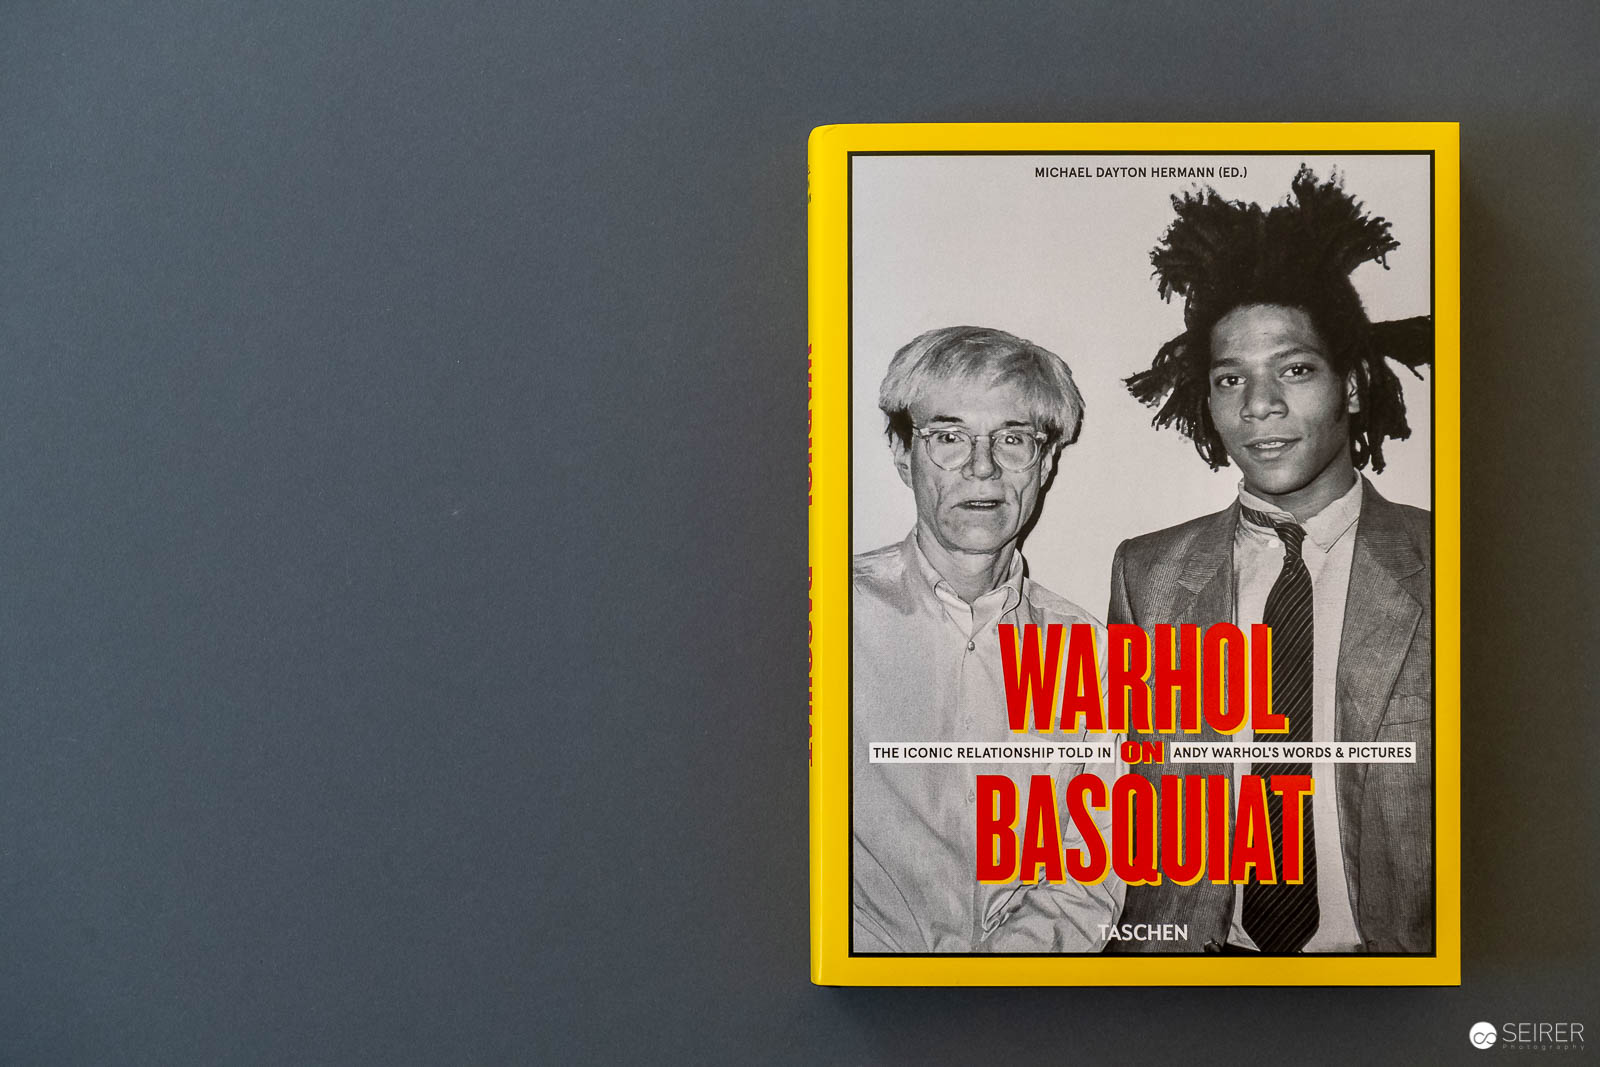 20191001 151531 Warhol On Basquiat 6675